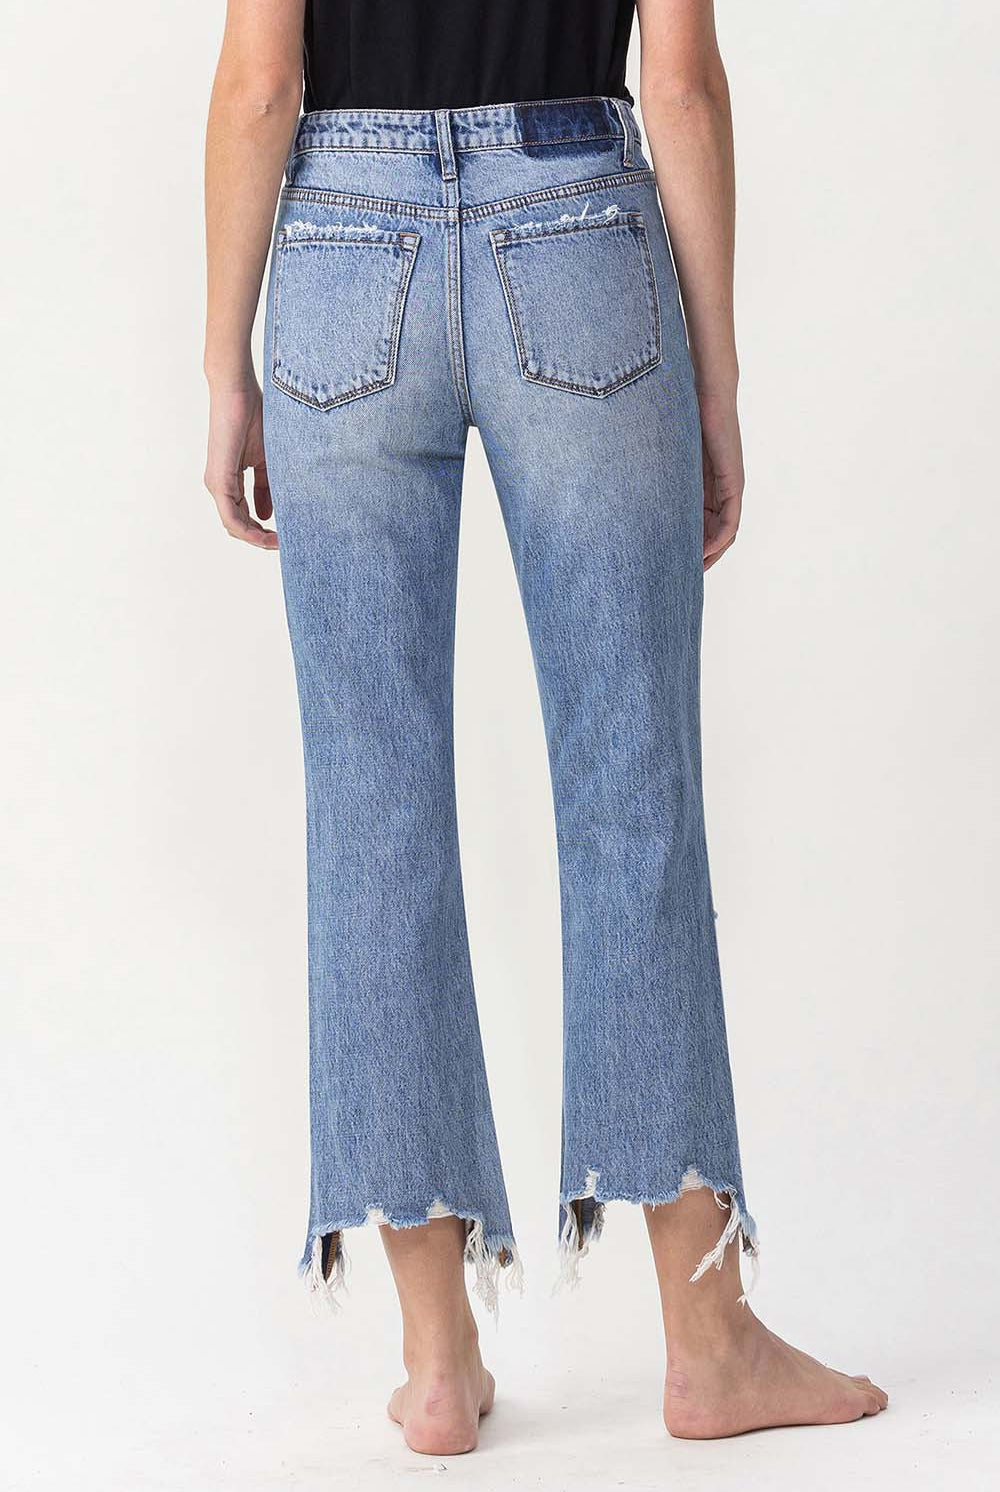 Lovervet High Rise Distressed Straight Jeans-Jeans-Trendsi-Urban Threadz Boutique, Women's Fashion Boutique in Saugatuck, MI